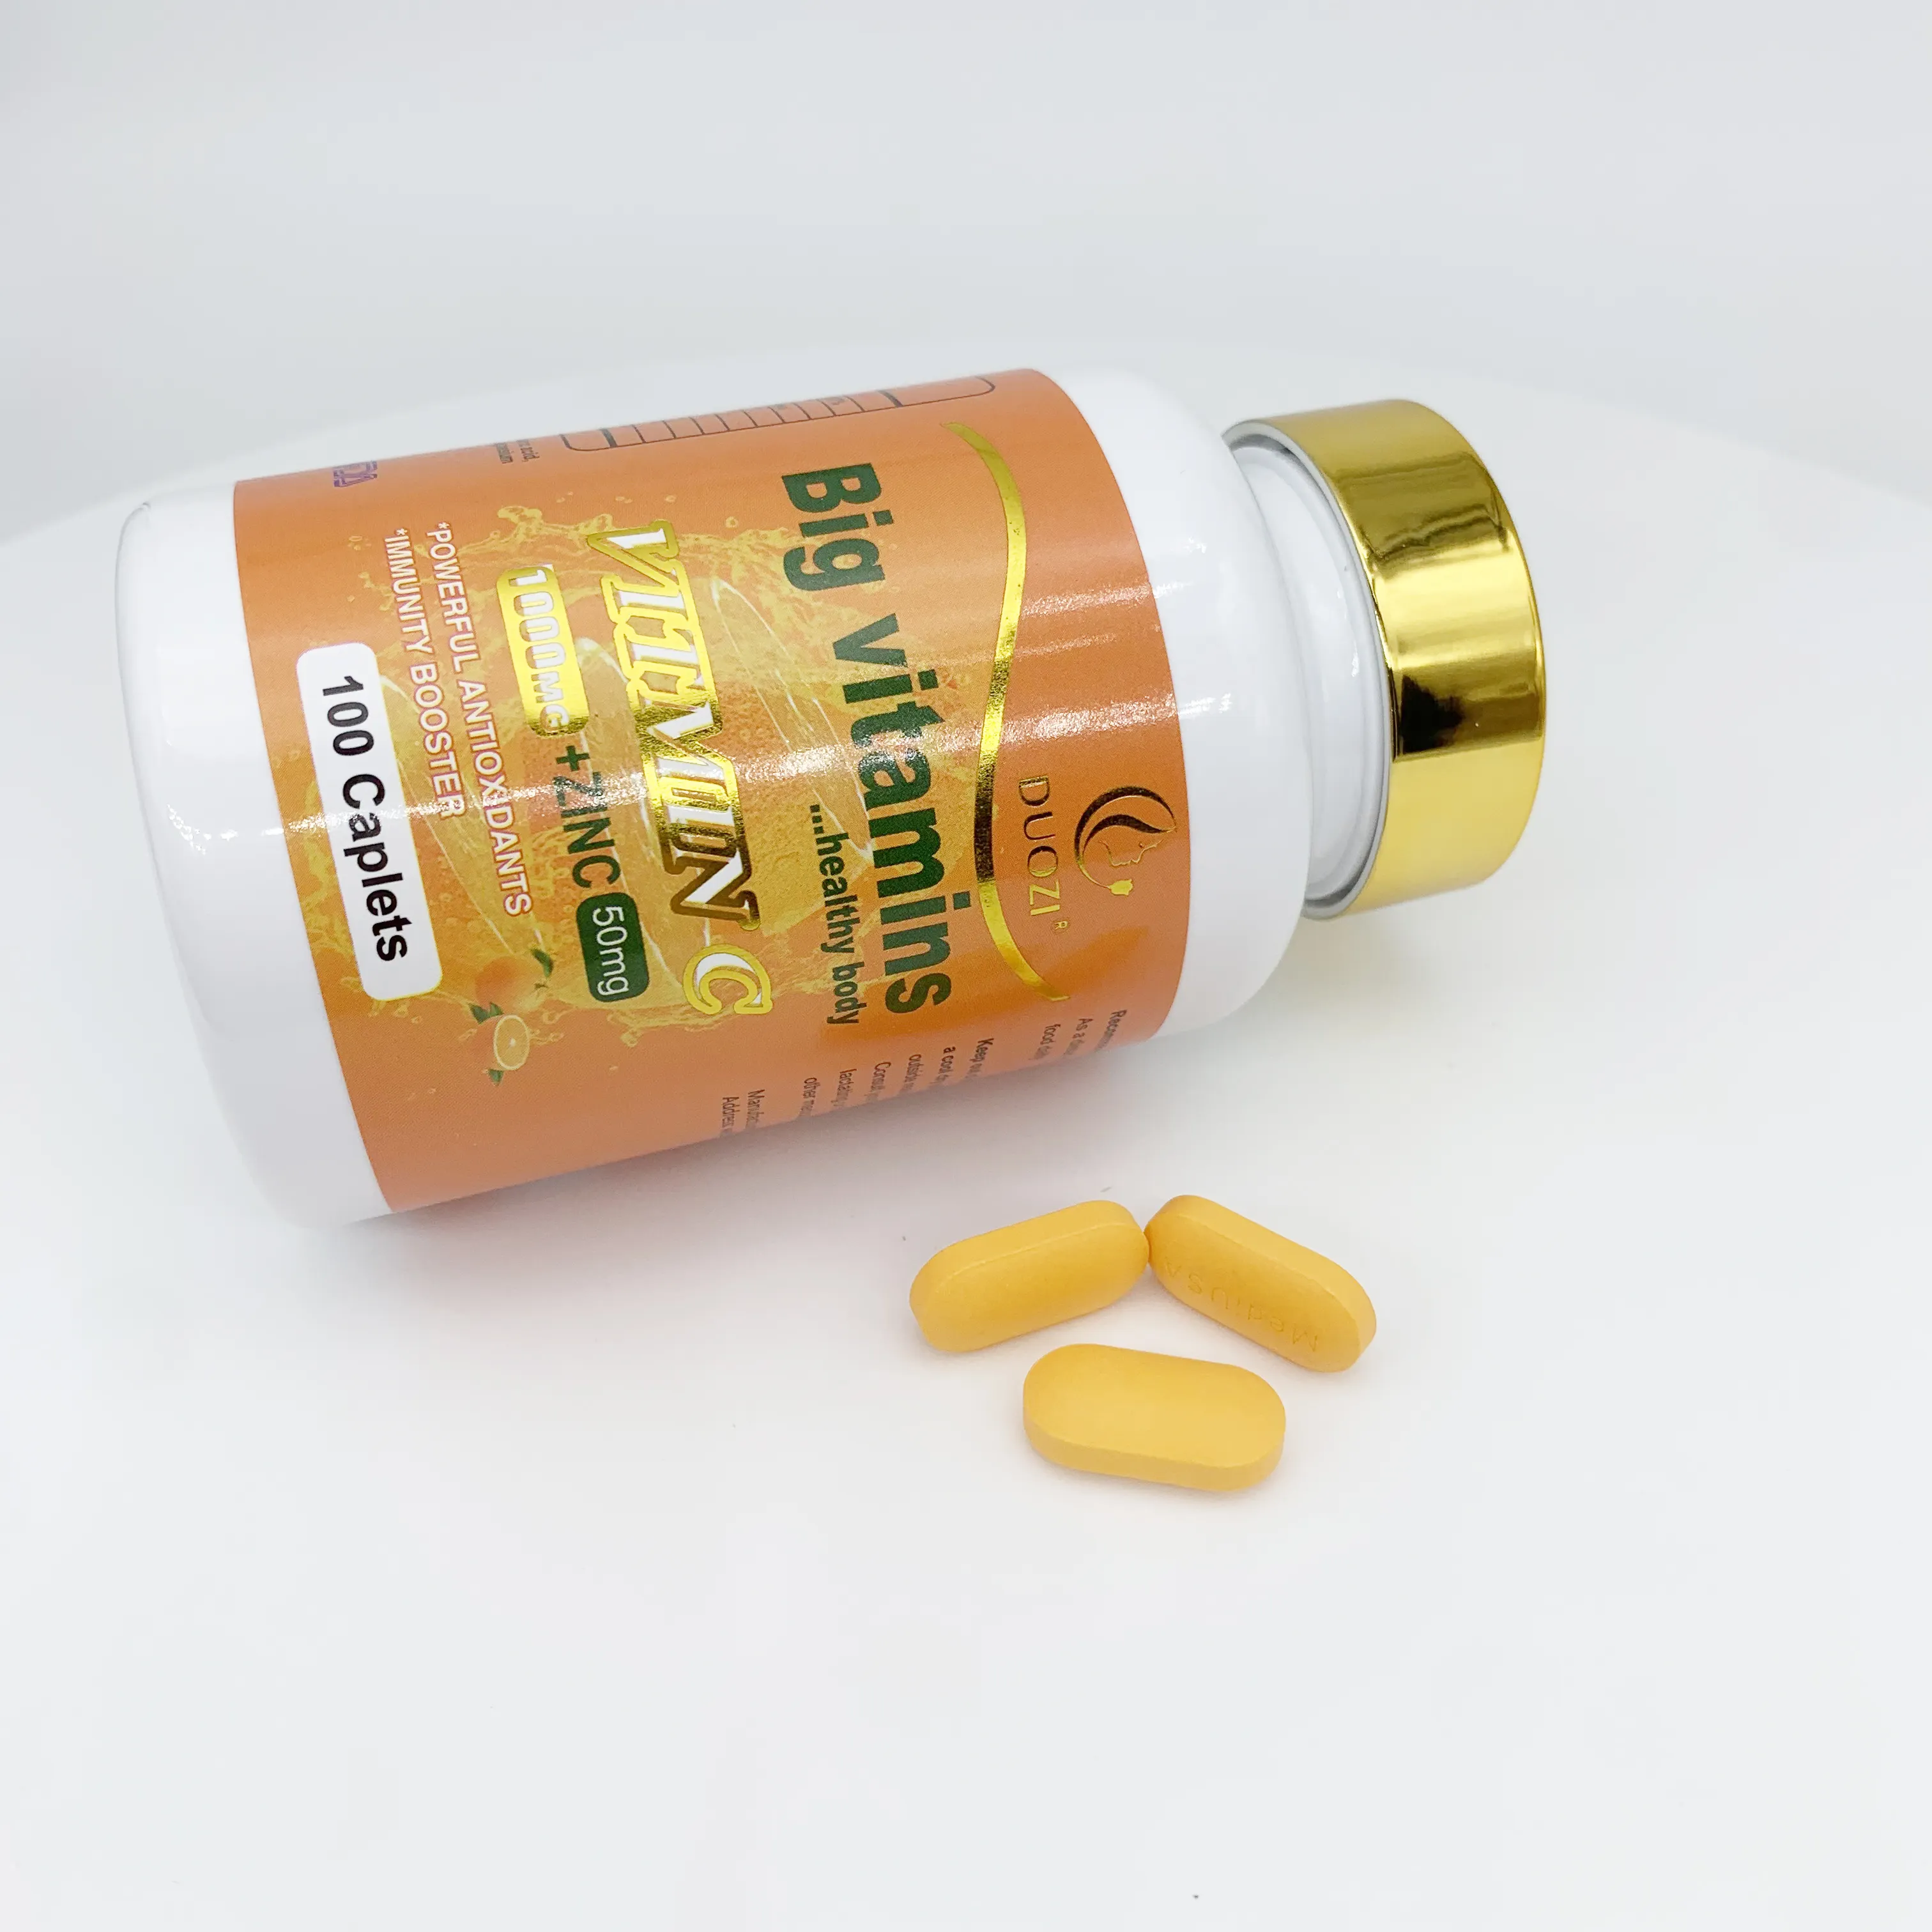 OEM best price Vitamin C 1000mg Zinc 500mg Tablet Immunity Booster Supplement Men Women vitamin tablet